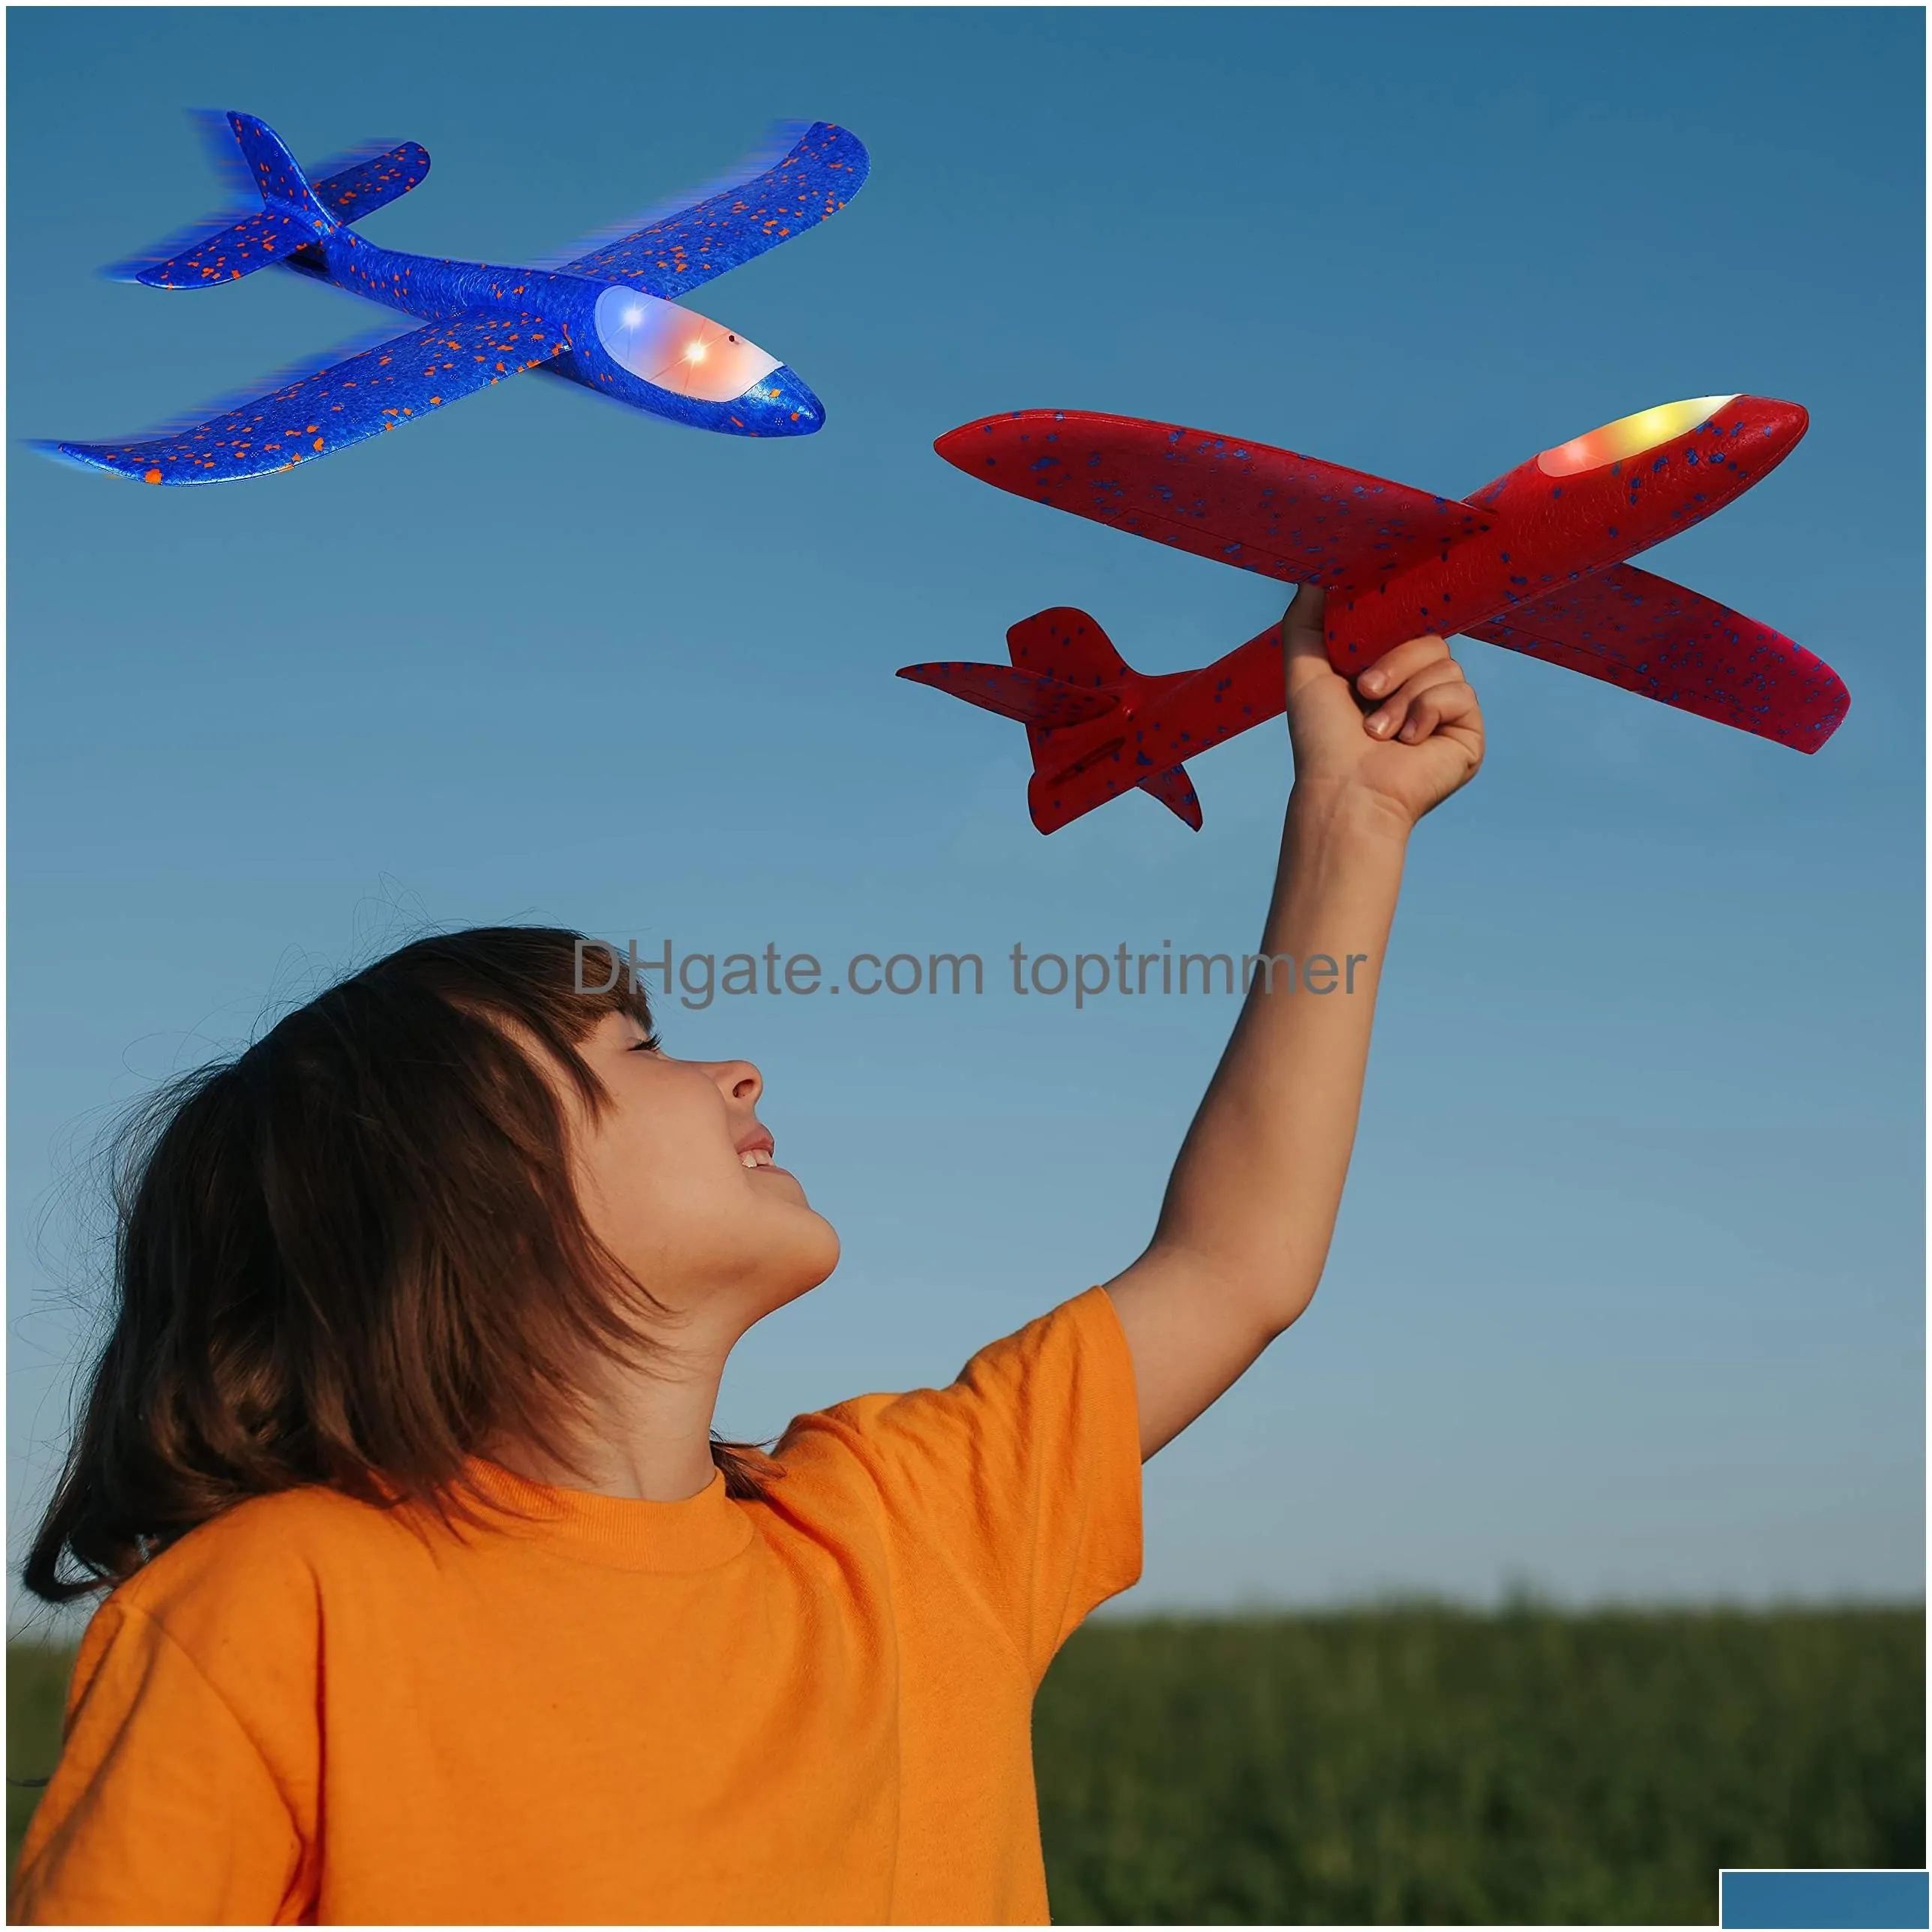 led flying toys ijo light airplane toys17.5 large throwing foam plane2 flight modes glider planeoutdoor for kidsflying gift boys gir